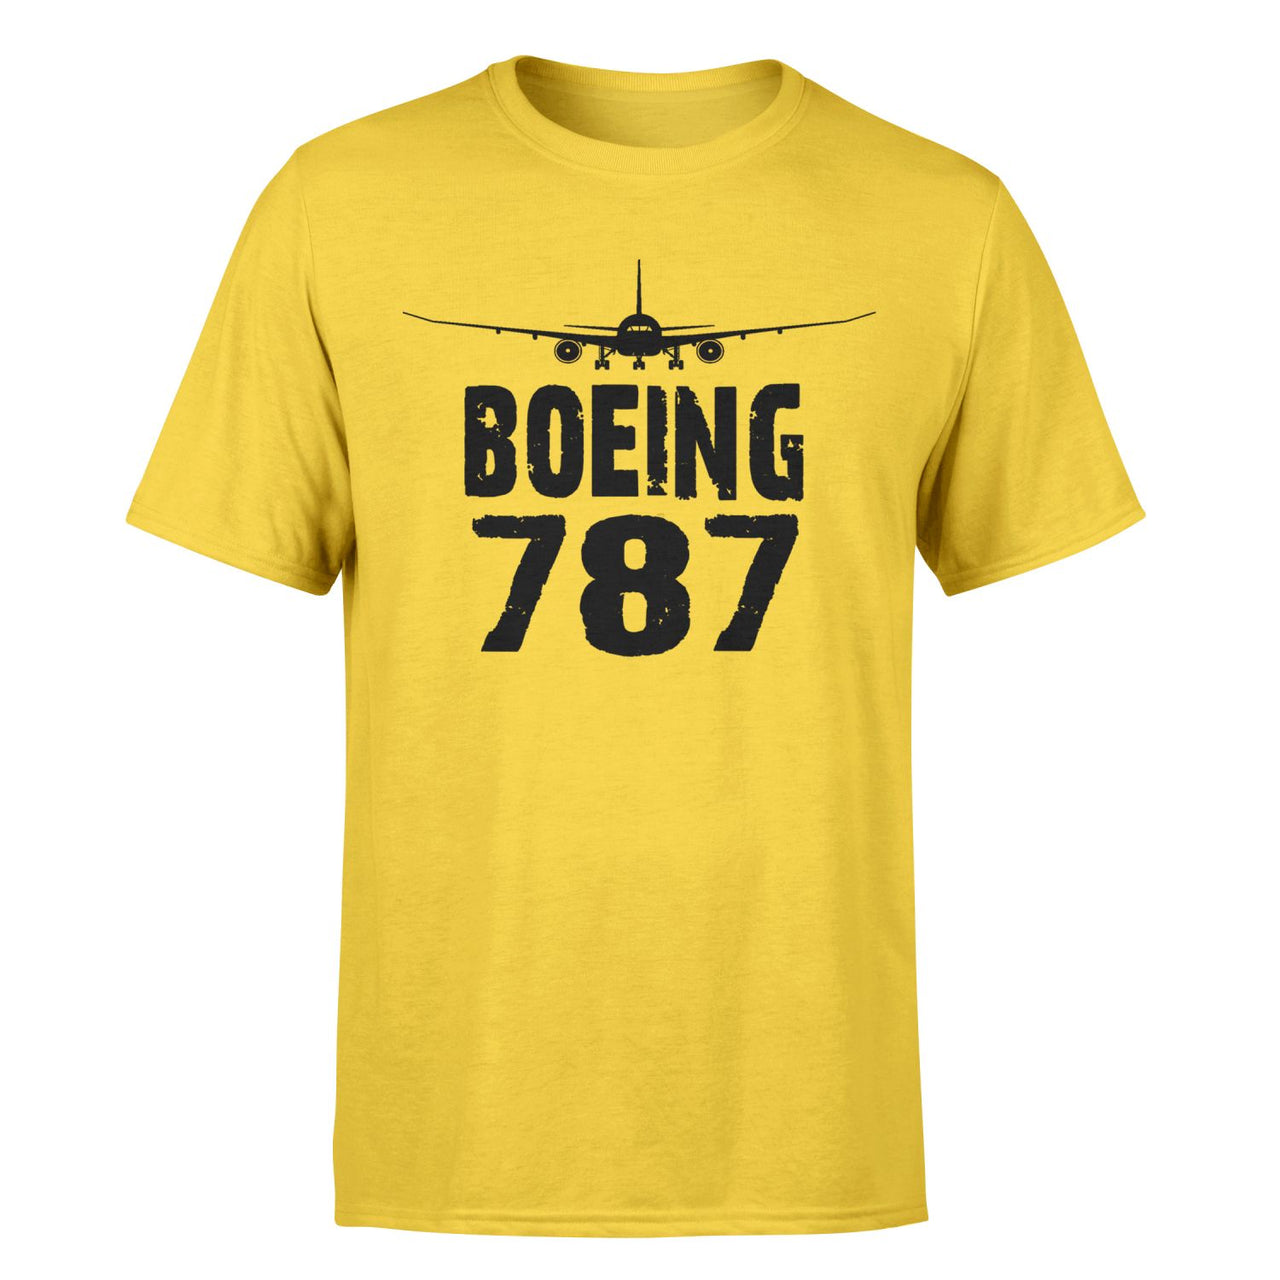 Boeing 787 & Plane Designed T-Shirts